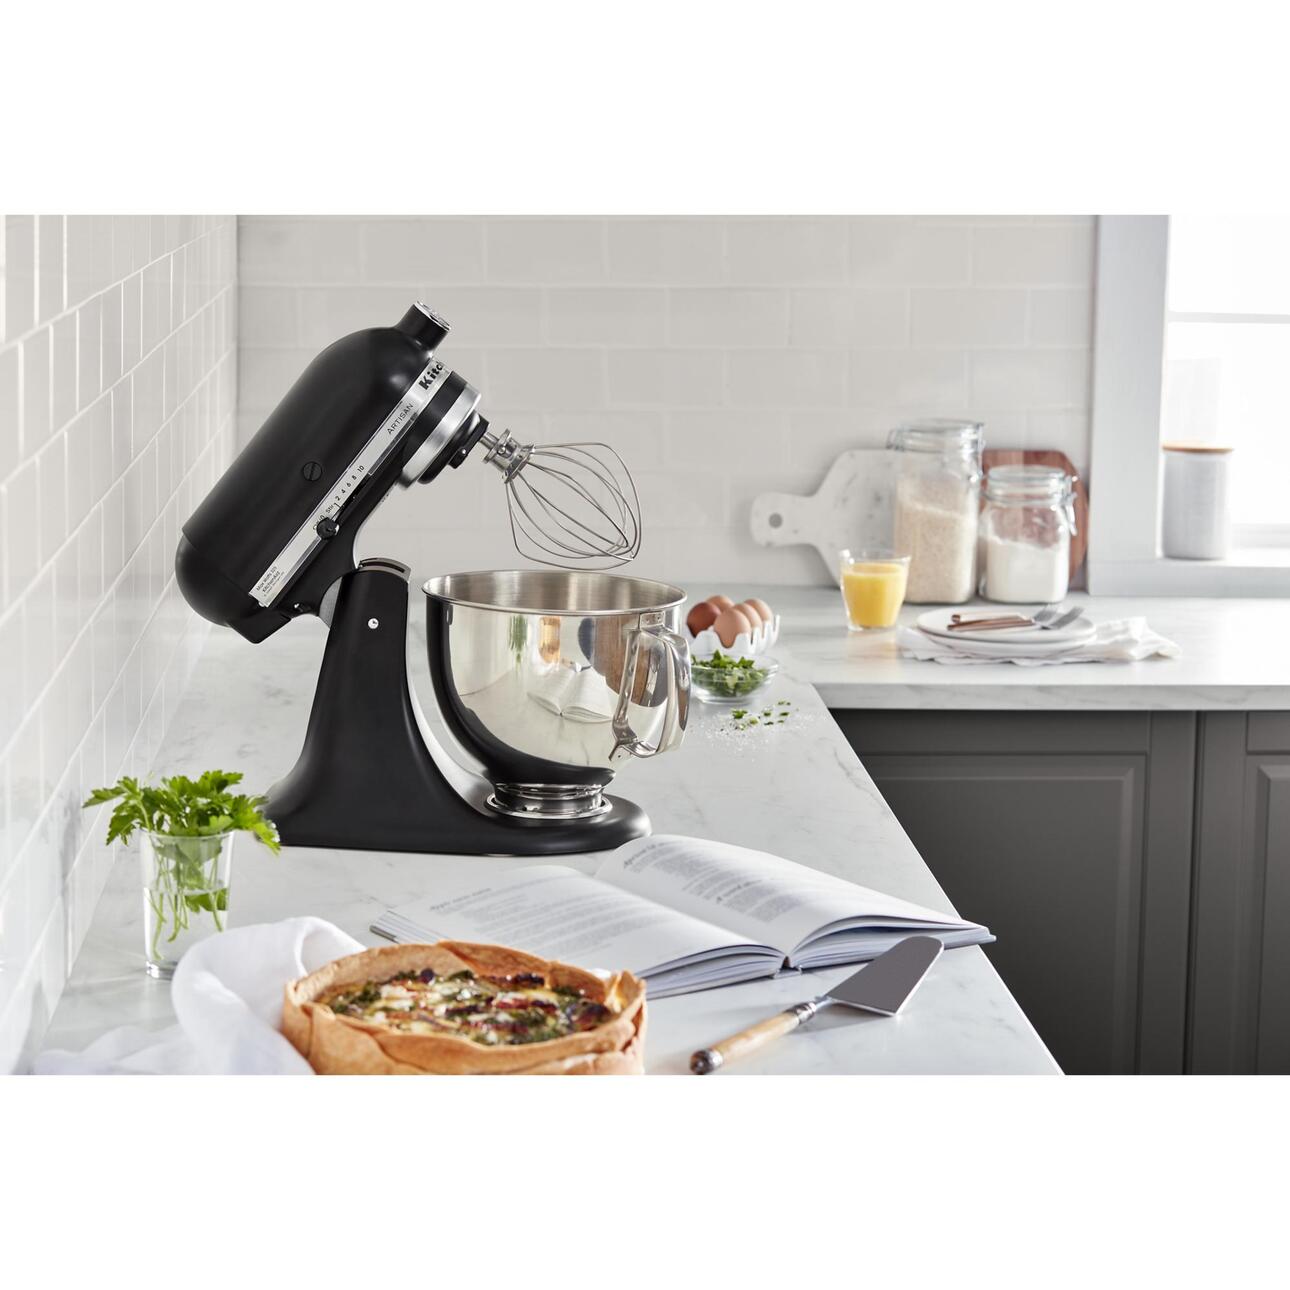 KitchenAid® Artisan® Series 5 Quart Tilt-Head Stand Mixer, Black Matte, KSM150PS - image 5 of 5